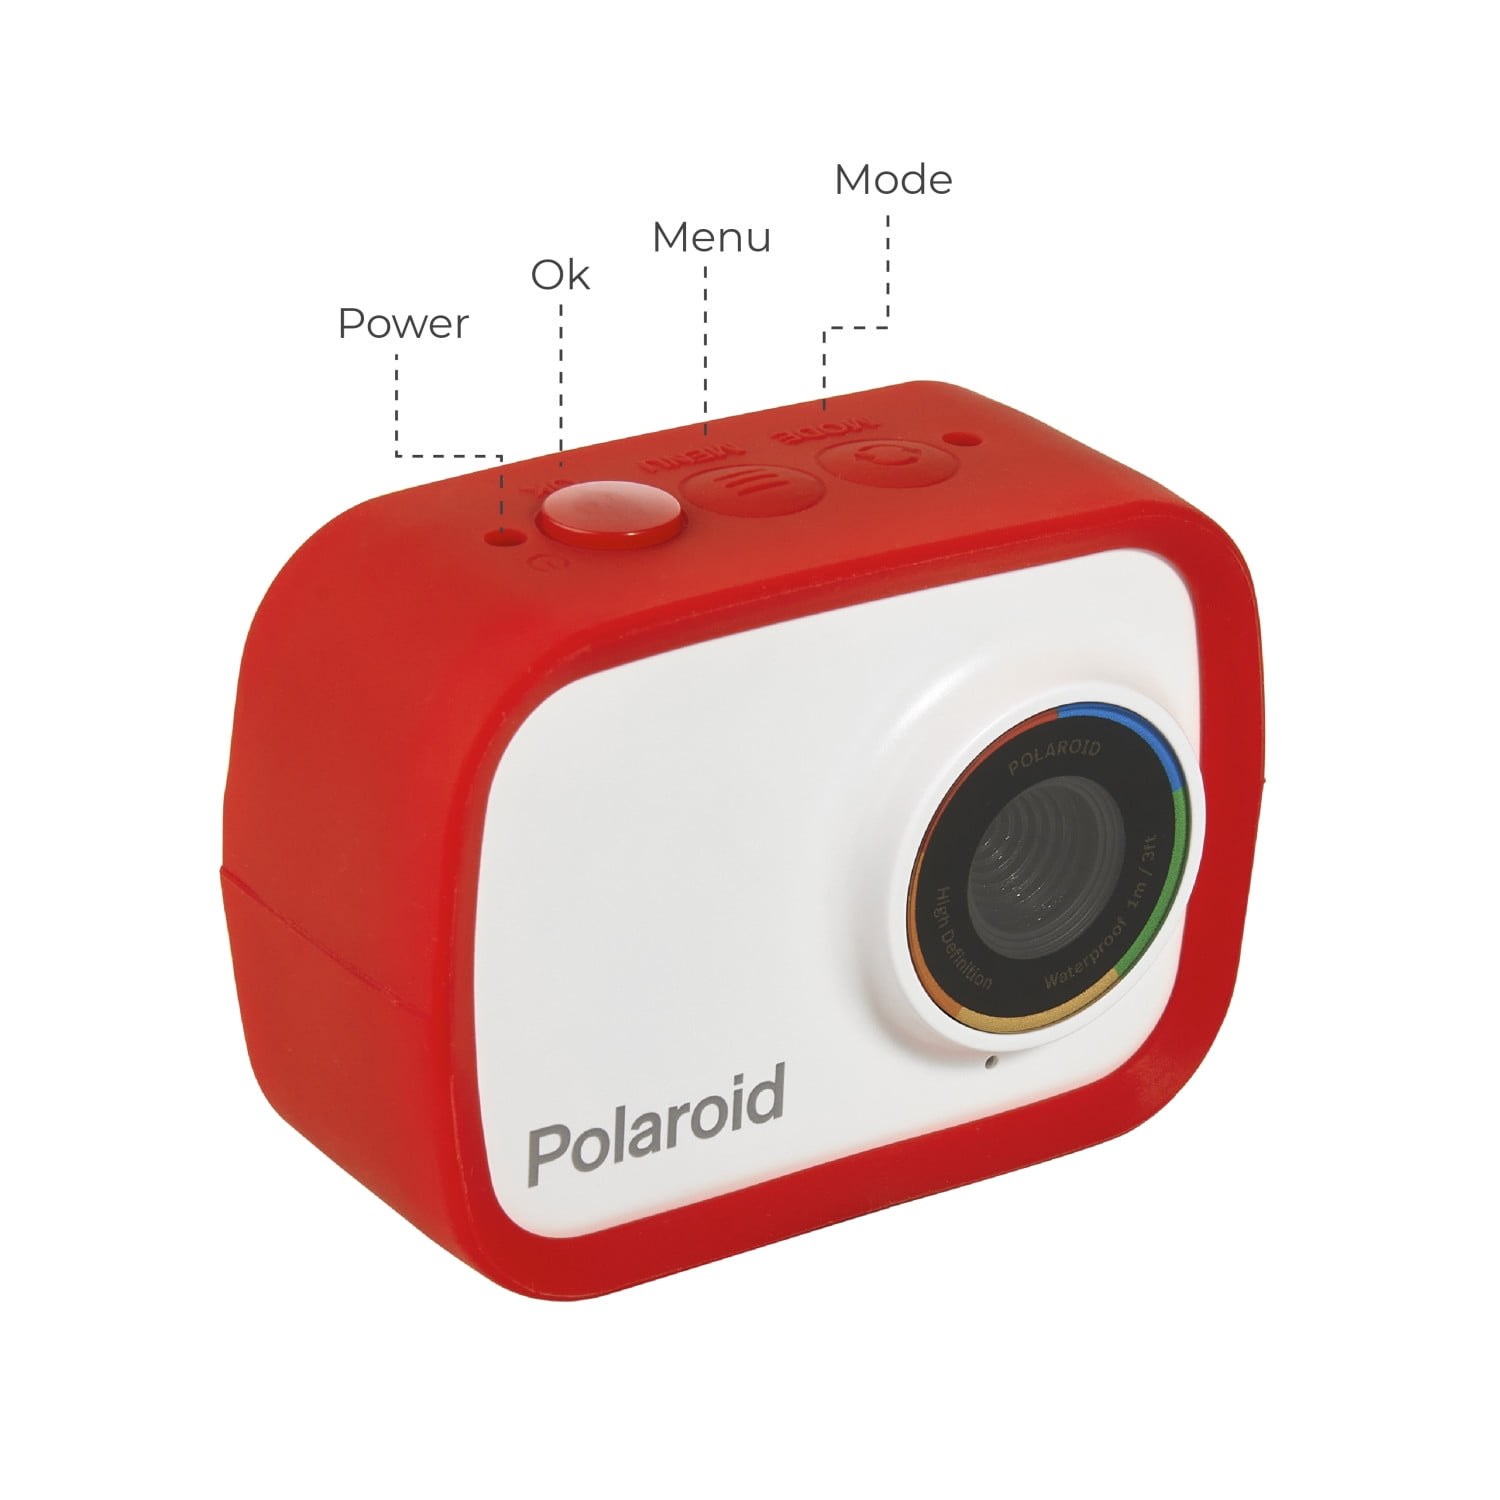 Overeenkomend Ondergeschikt Ongunstig Polaroid Sport Action Camera 720p 12.1mp, Waterproof, Rechargeable Battery,  Mounting Accessories - Walmart.com